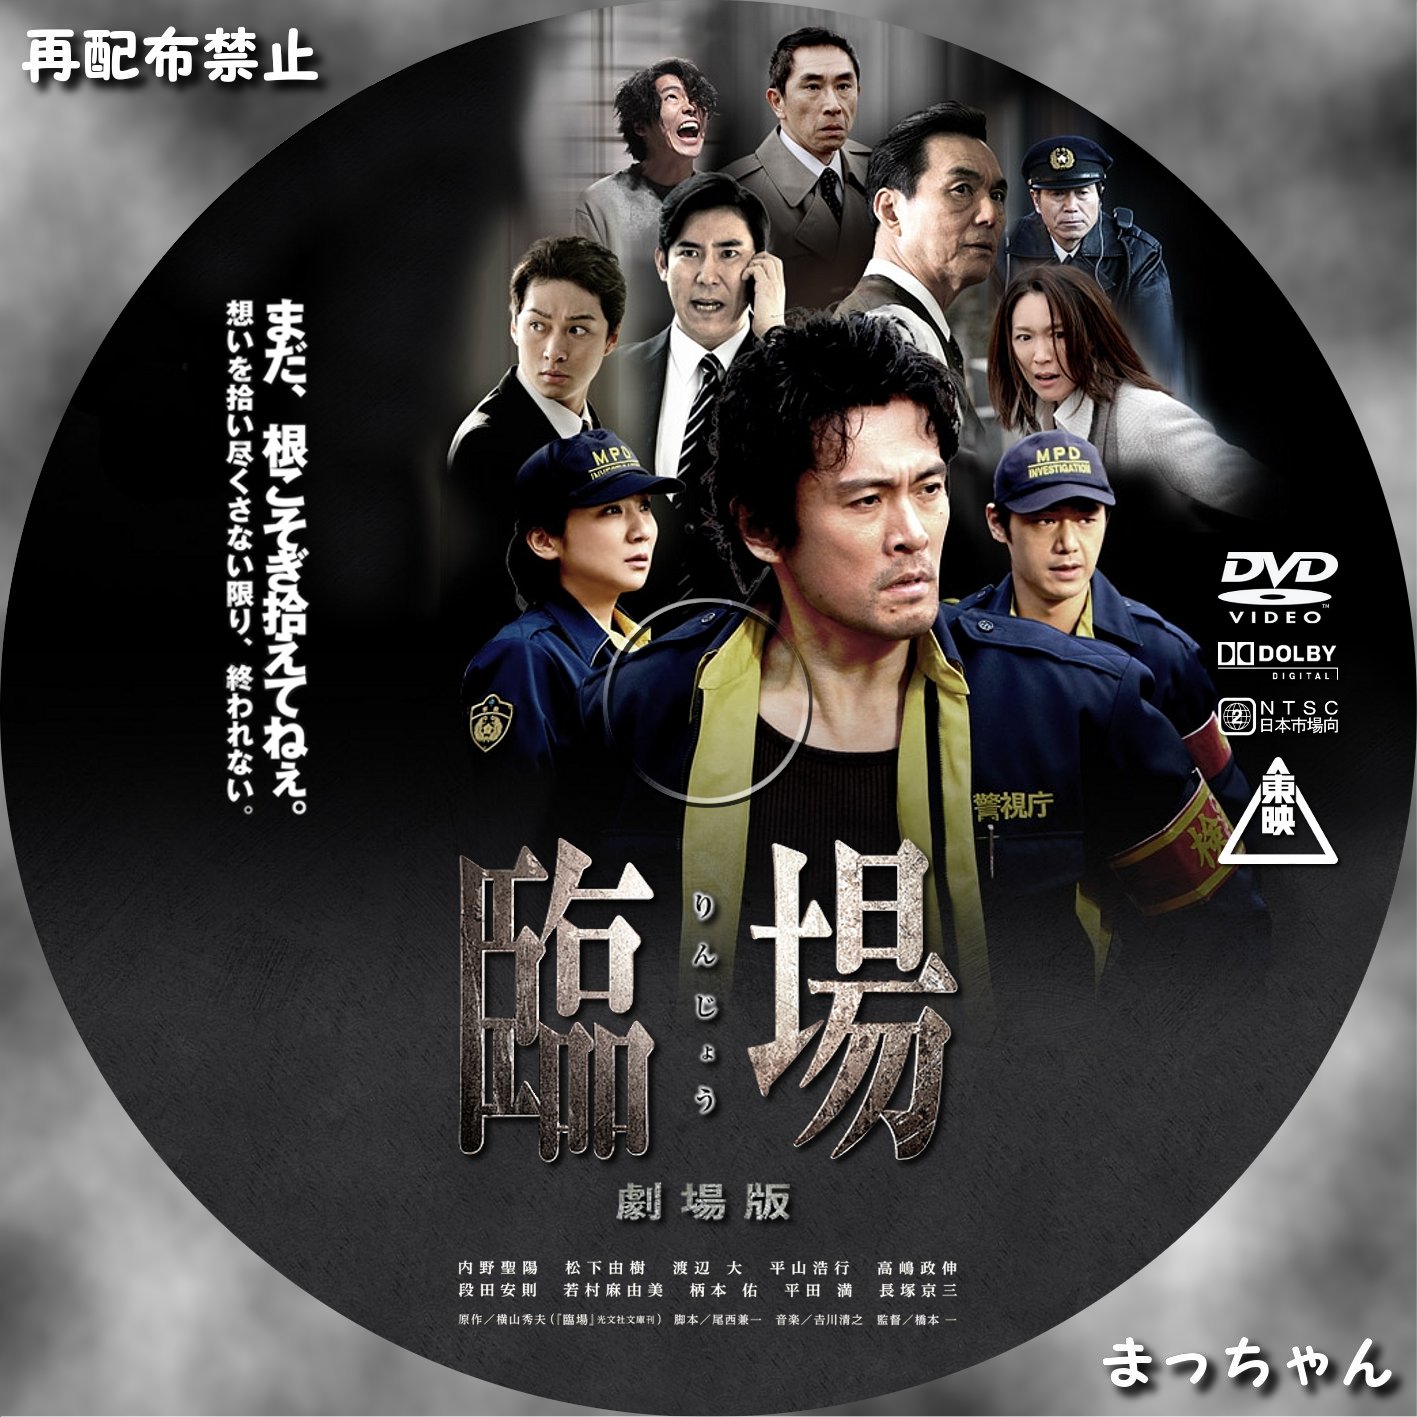 臨場 DVD‐BOX wyw801m www.krzysztofbialy.com